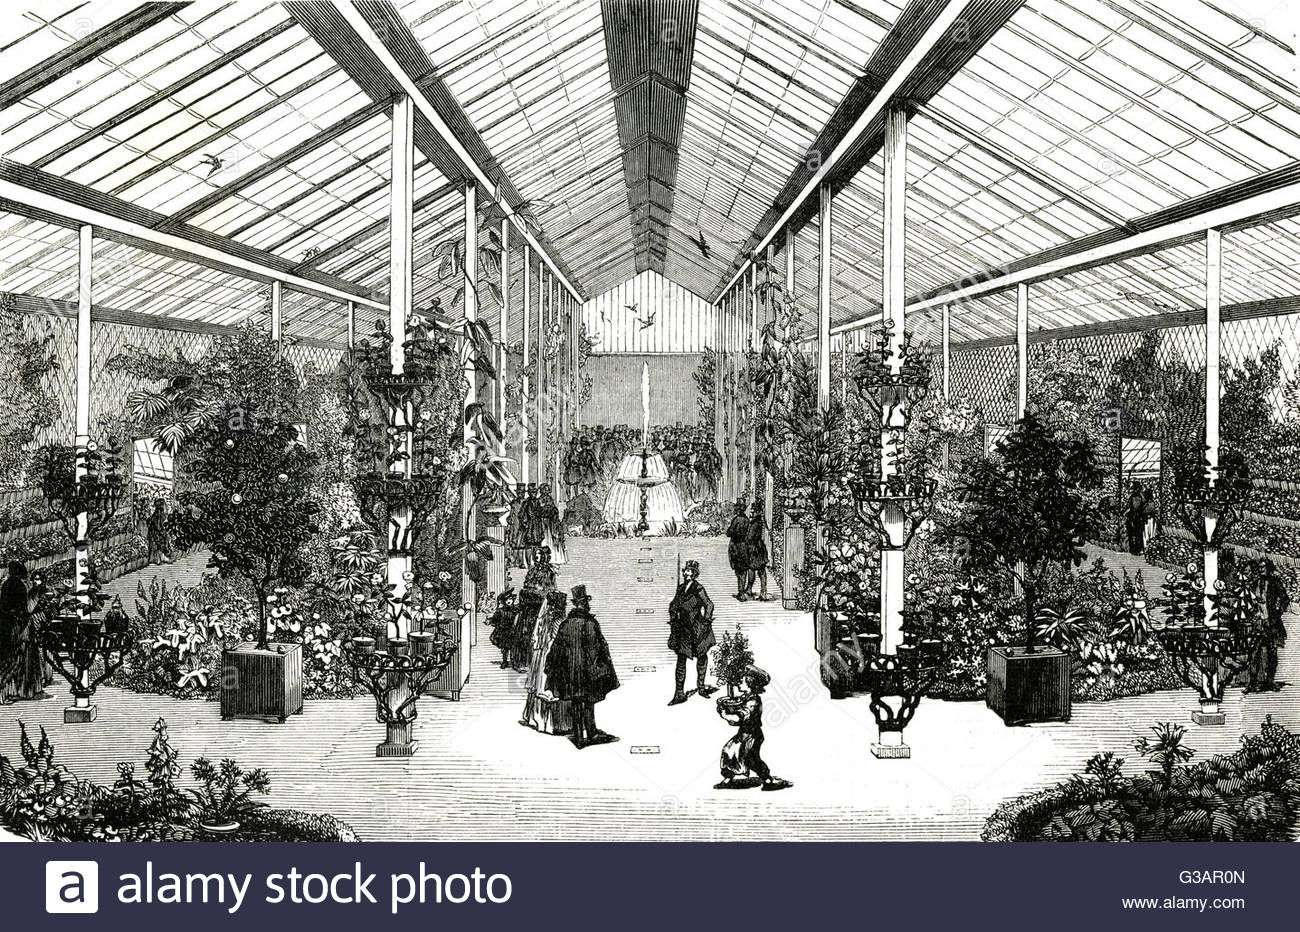 paris france champs elysees winter garden date 1847 G3AR0N